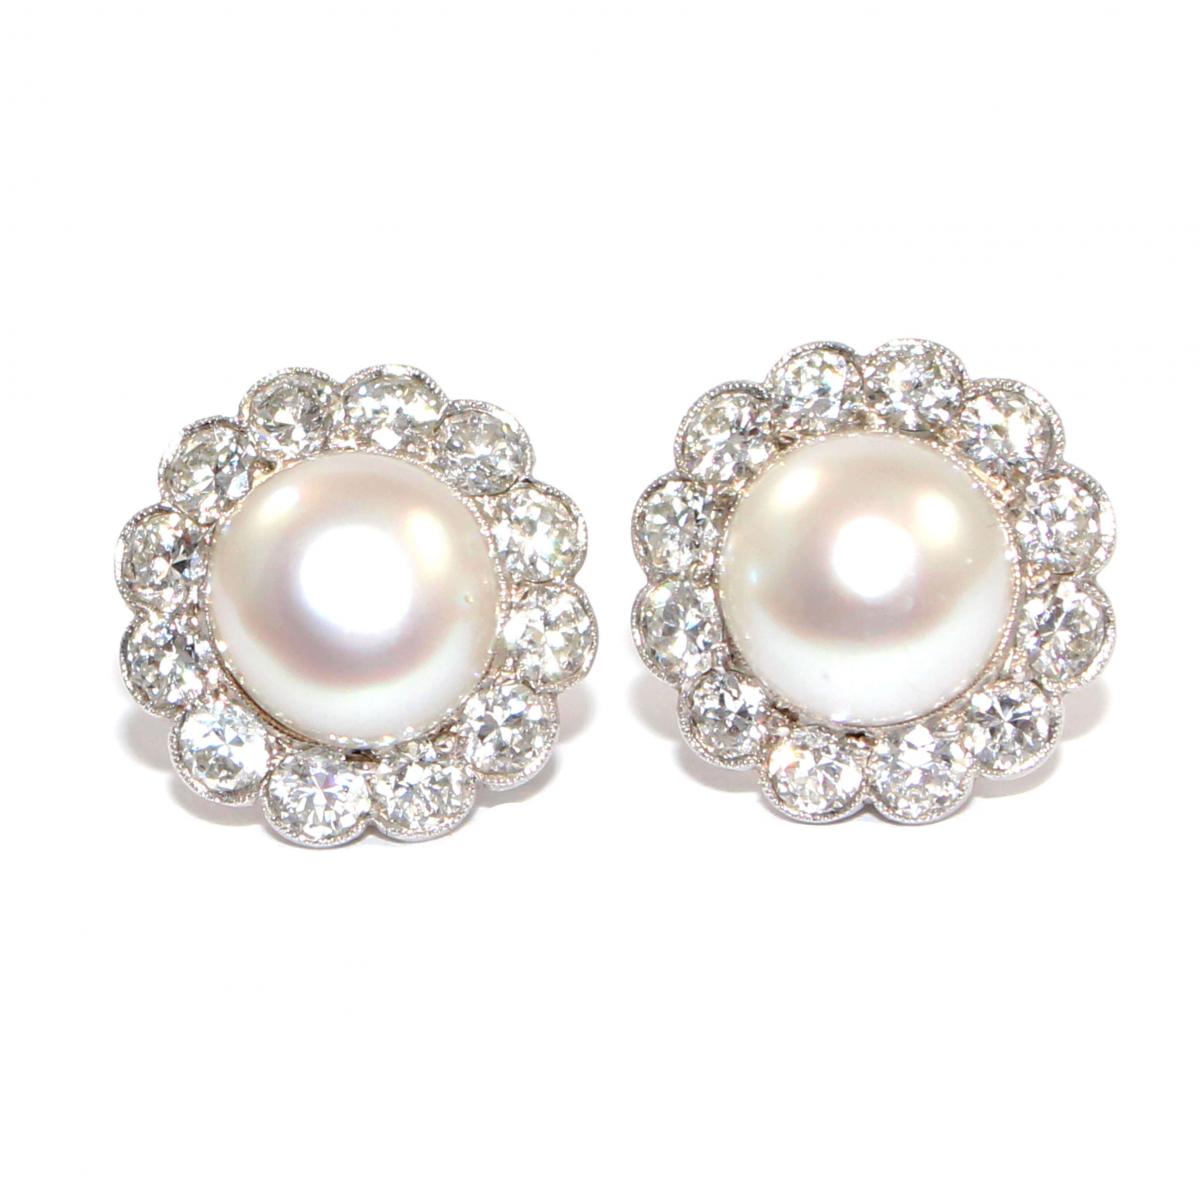 Art Deco Large Pearl & Diamond Cluster Earrings c.1930